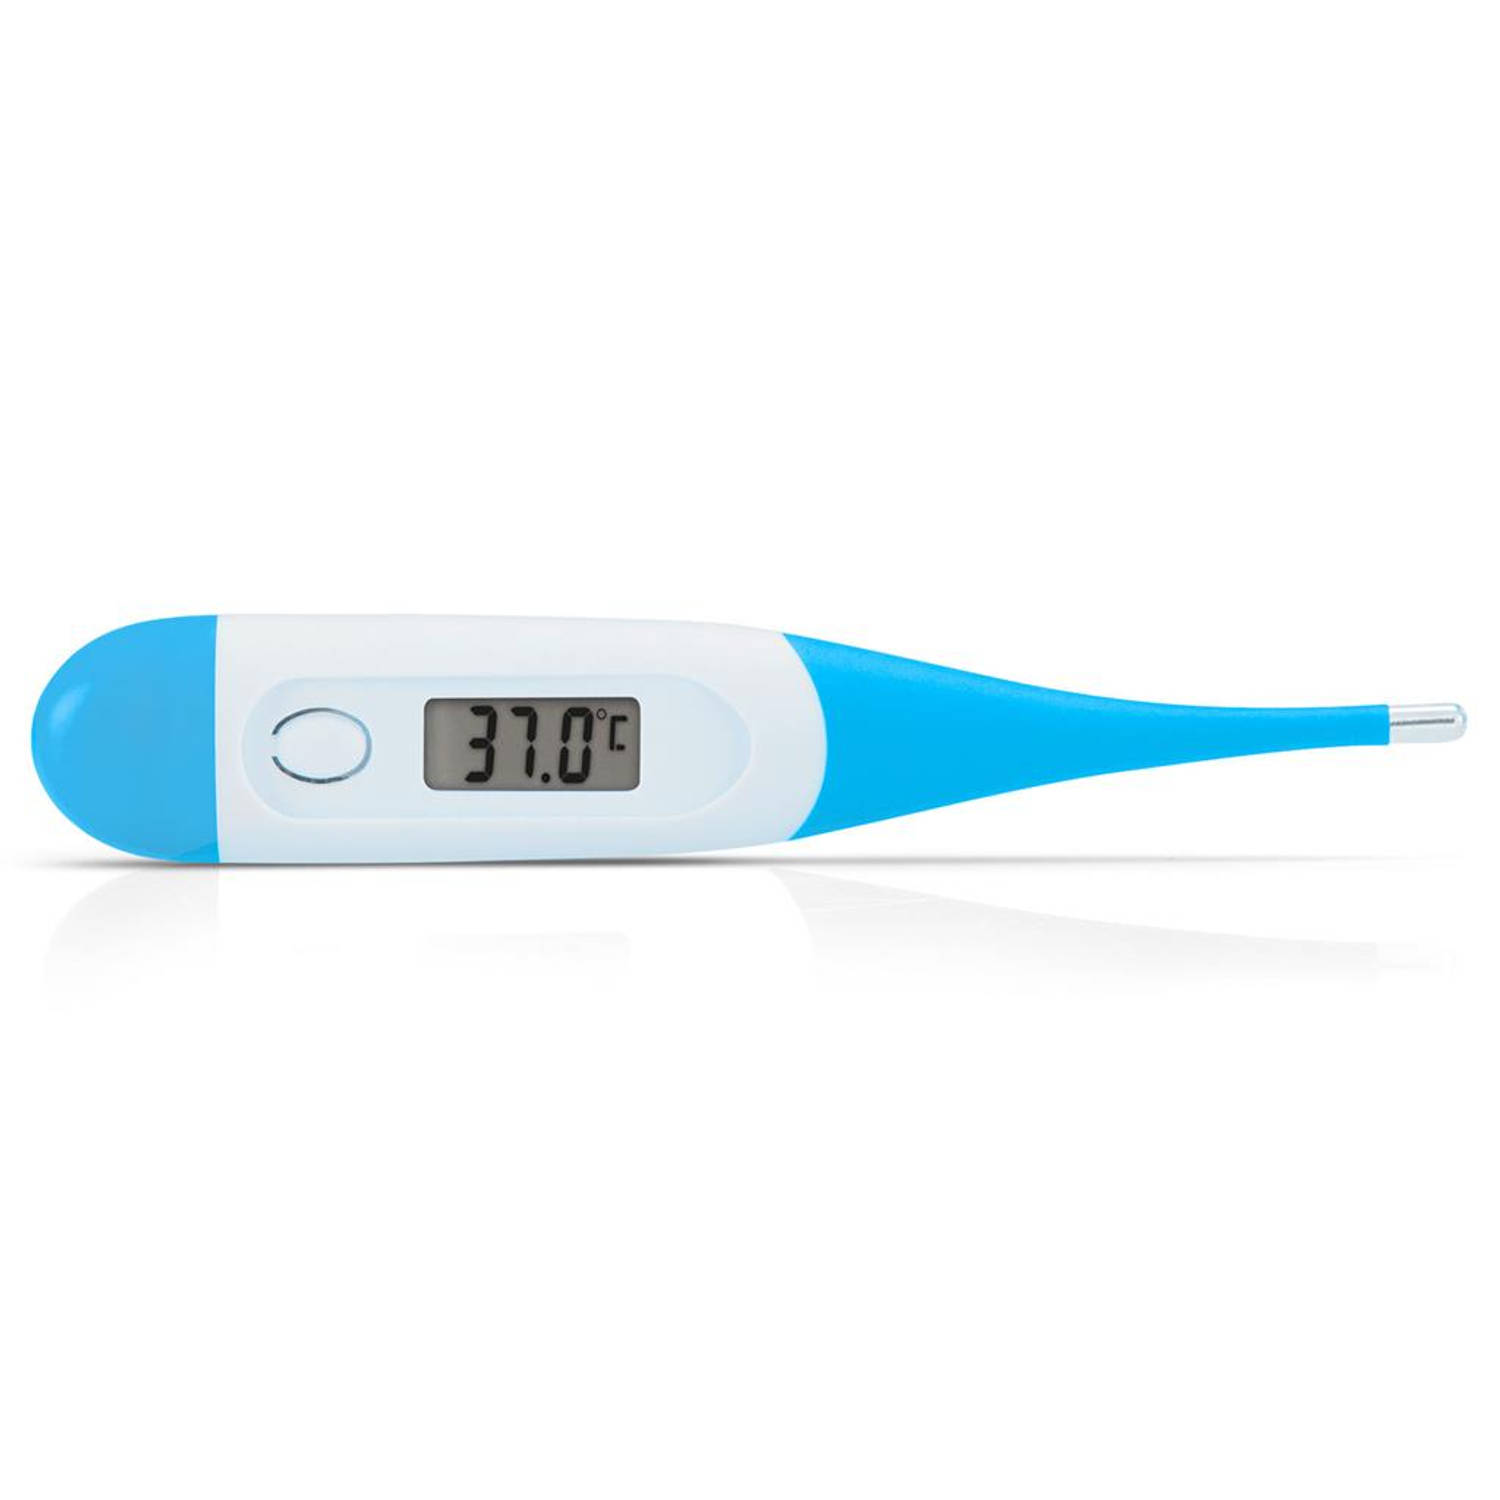 oppakken zeven Opschudding Alecto digitale thermometer - blauw | Blokker